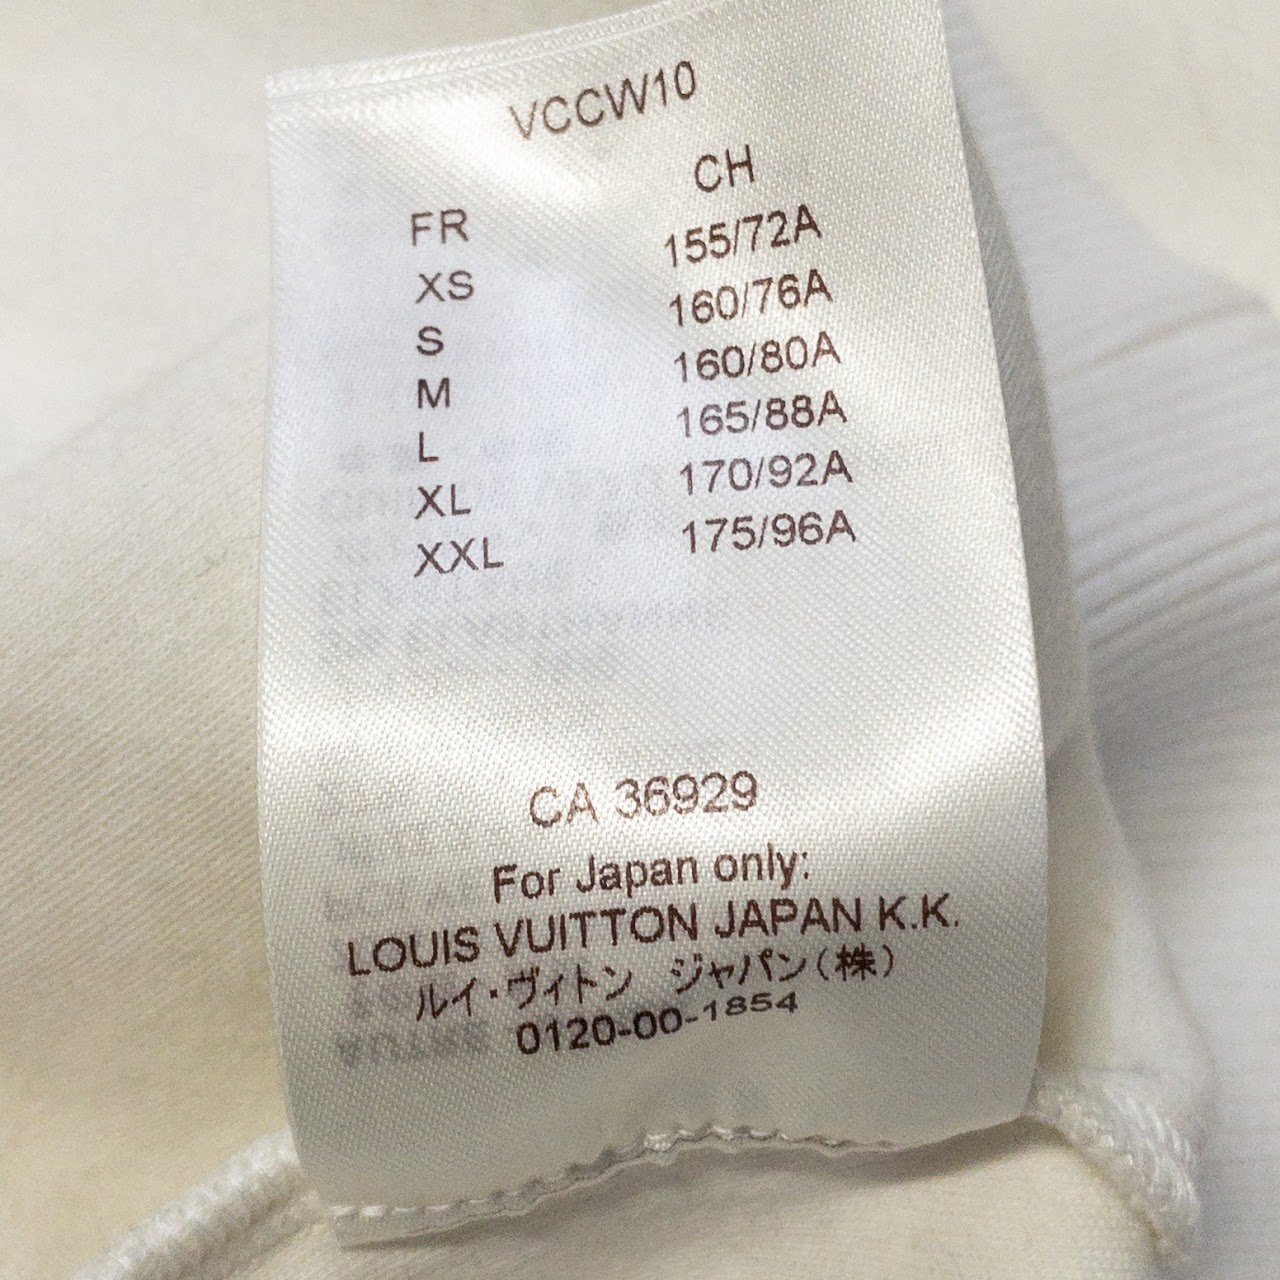 Louis Vuitton in Japan